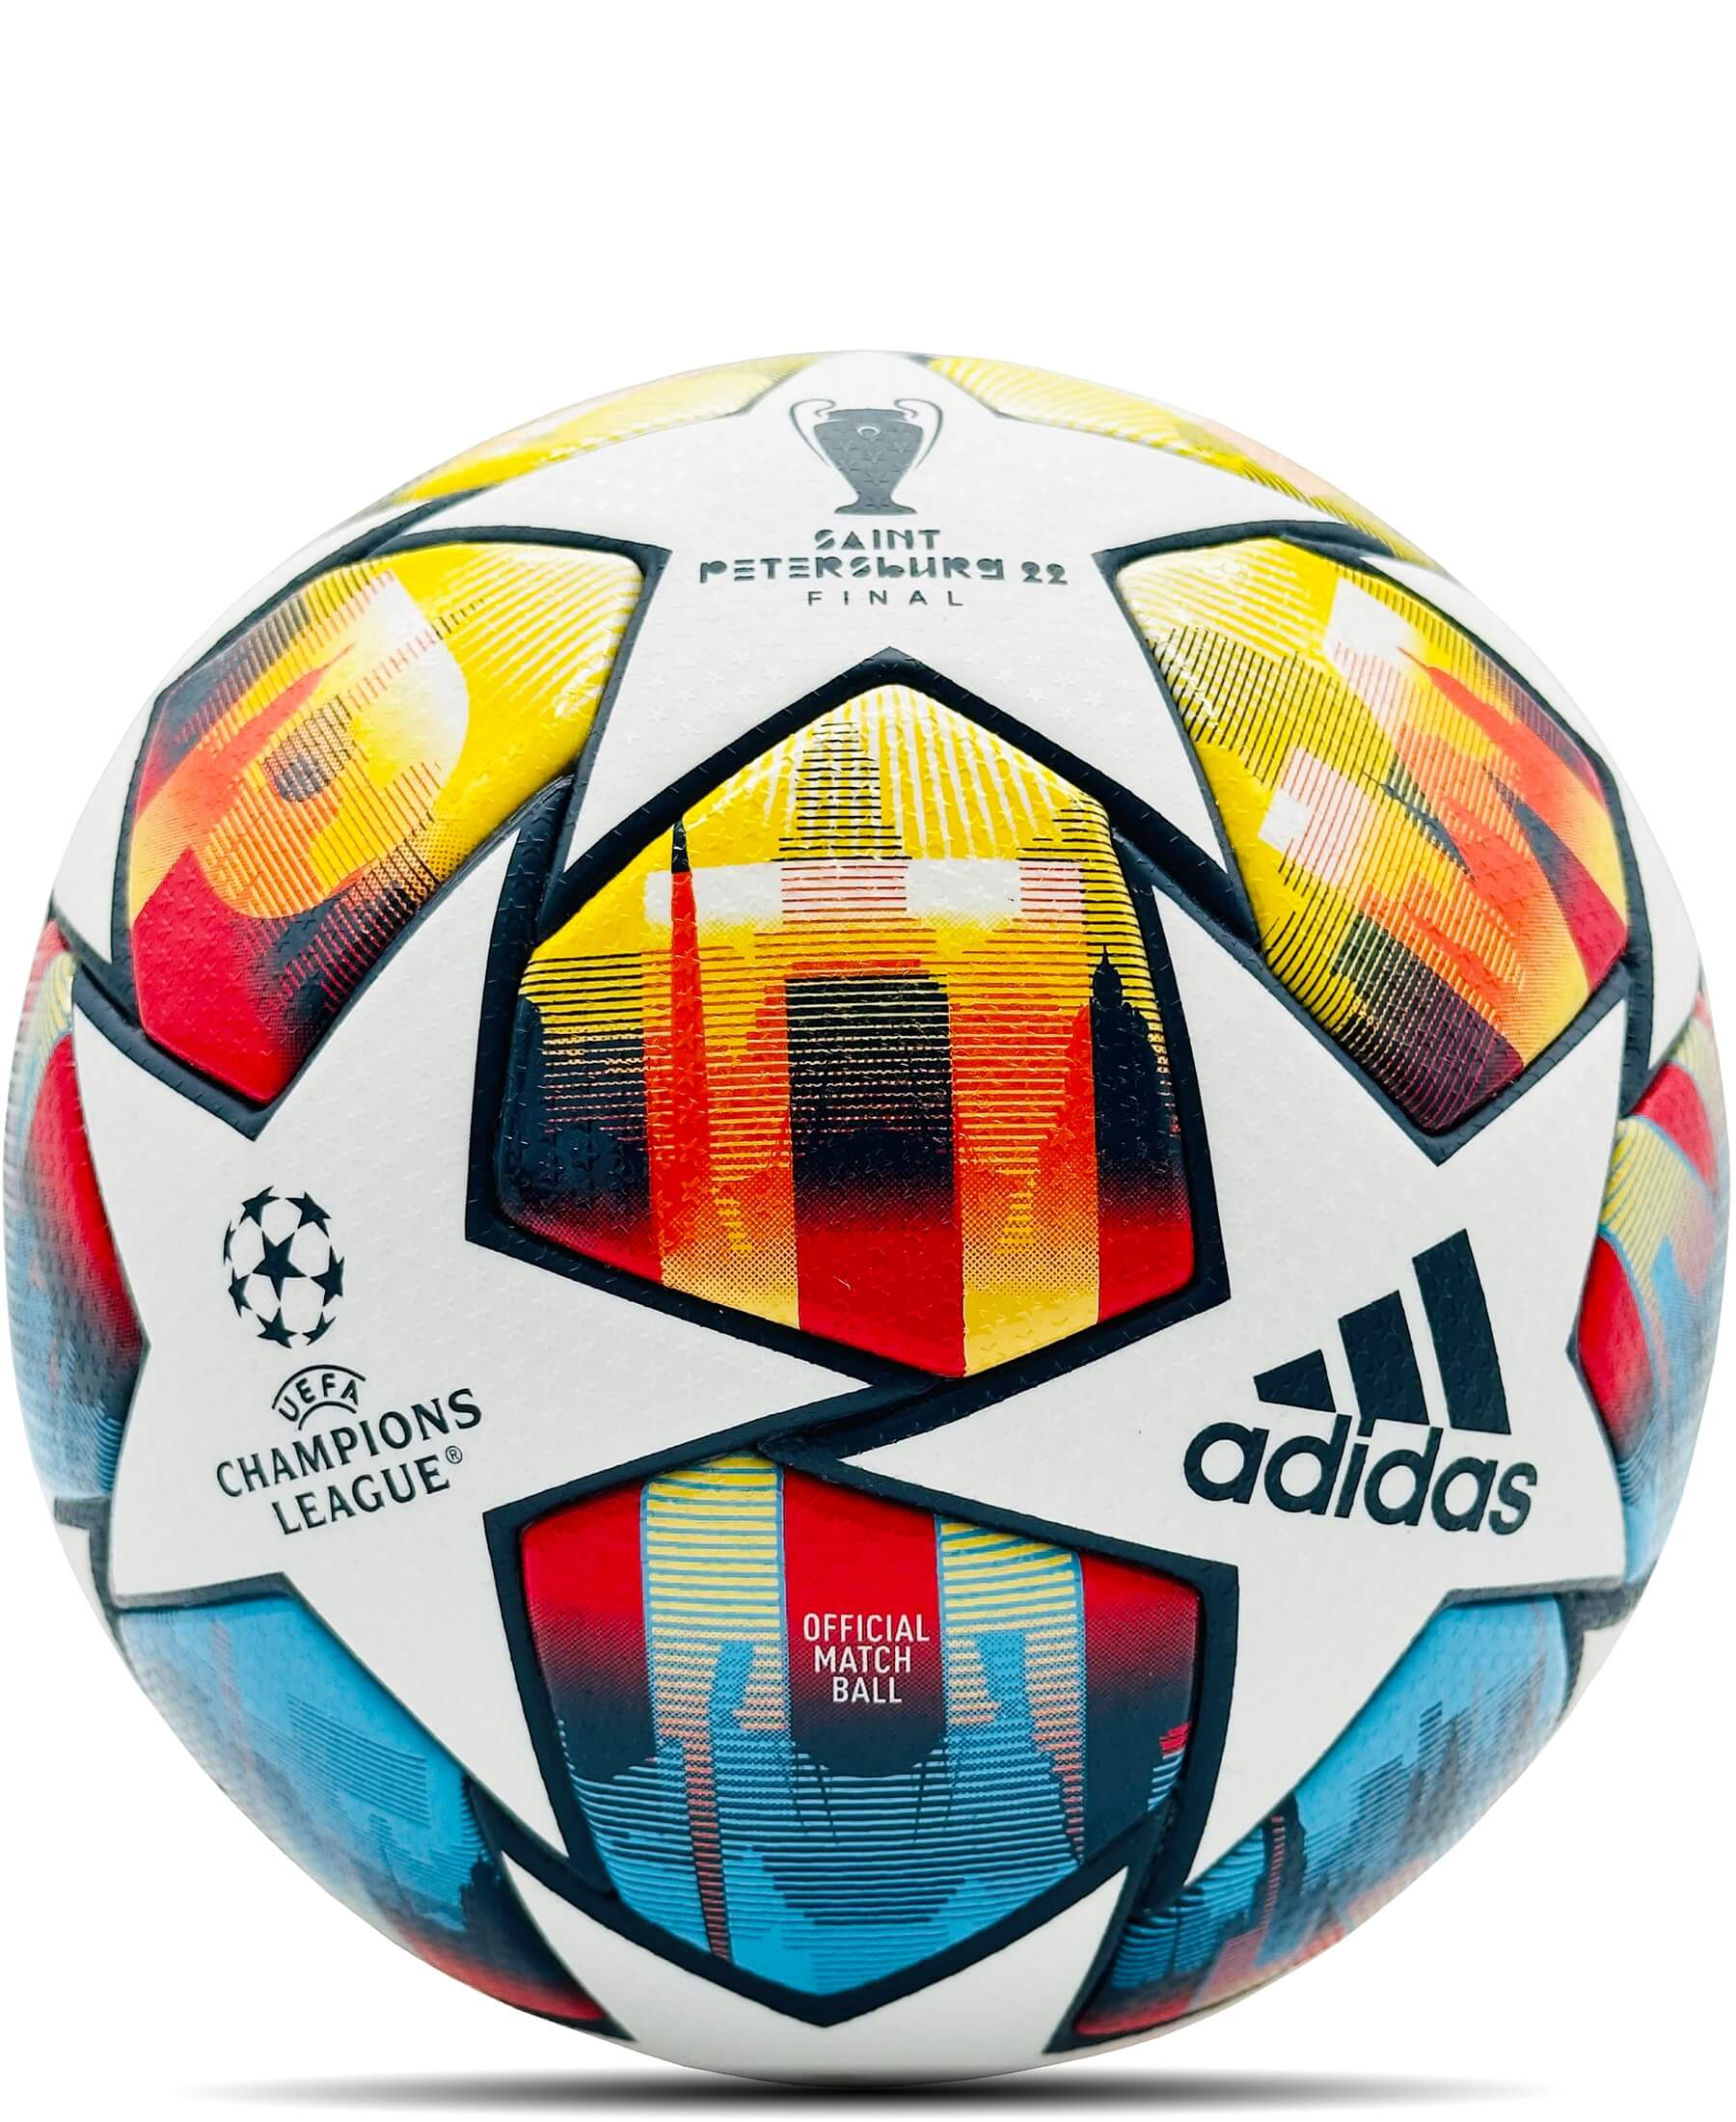 Official Match Ball UEFA Champions League Pro Saint Petersburg Final 2022